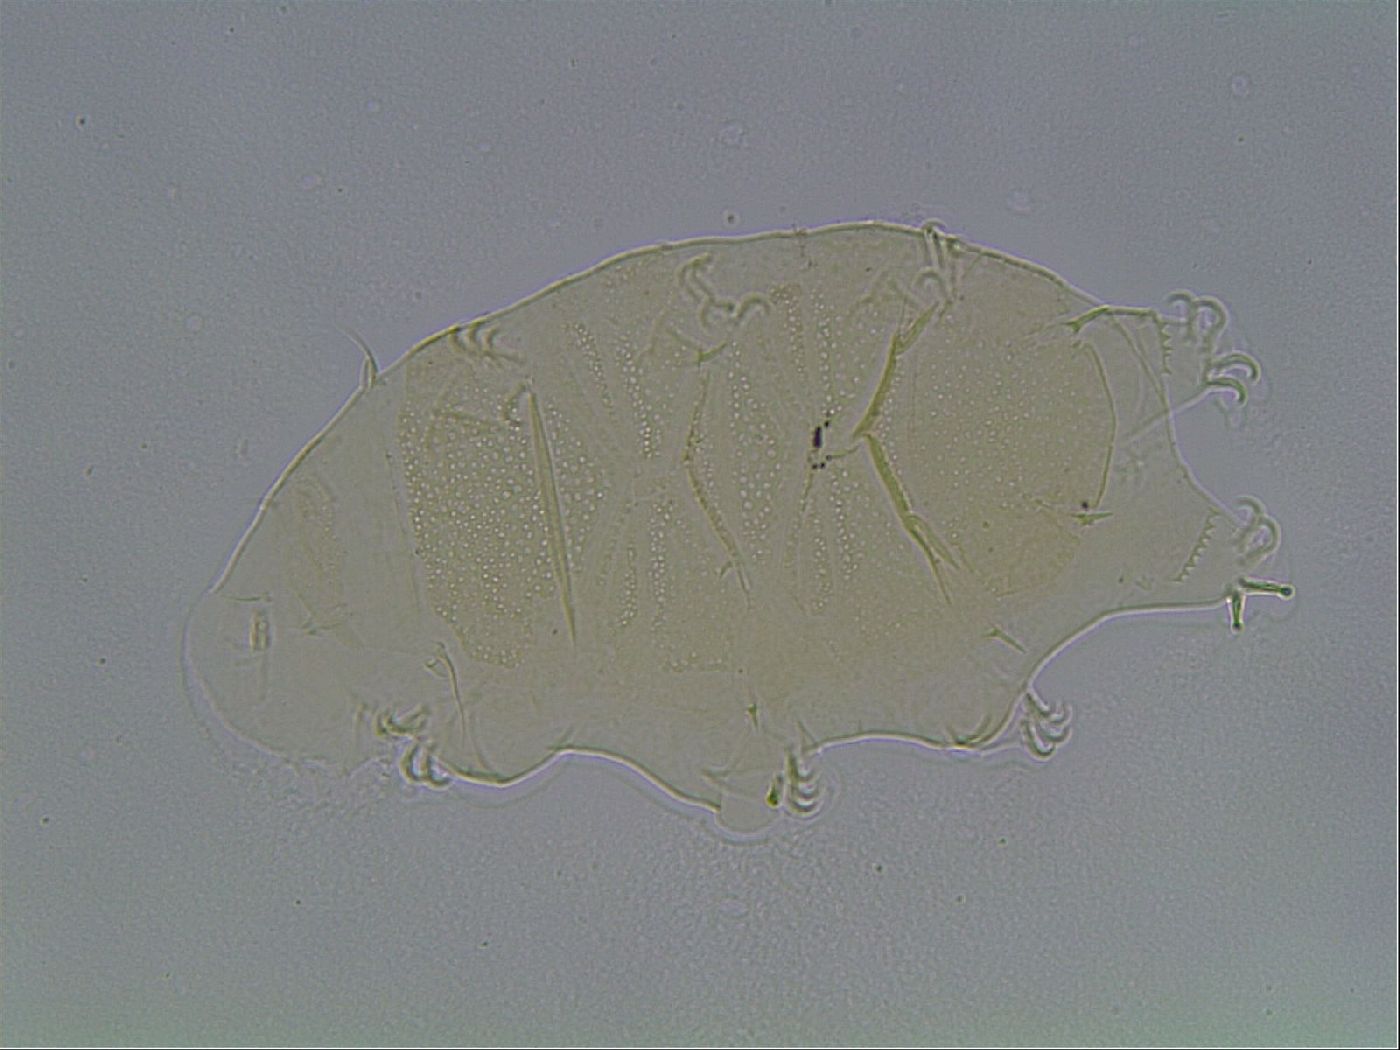 Echiniscidae image